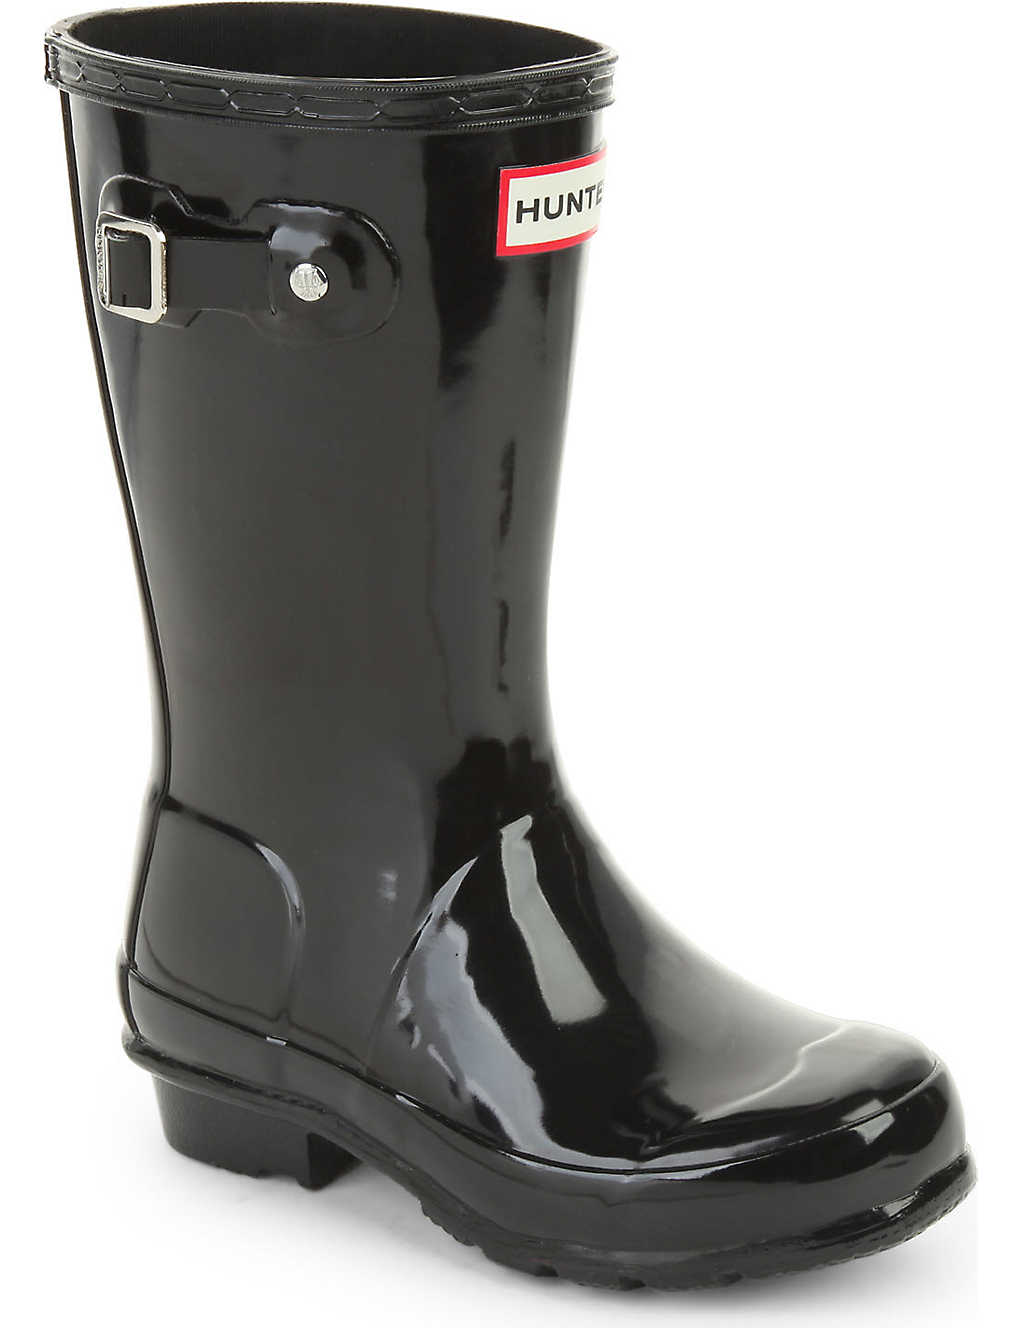 Original Kids wellies 7-10 years Size Selfridges & Co Boys Shoes Boots Rain Boots 12.5 UK EUR 31 